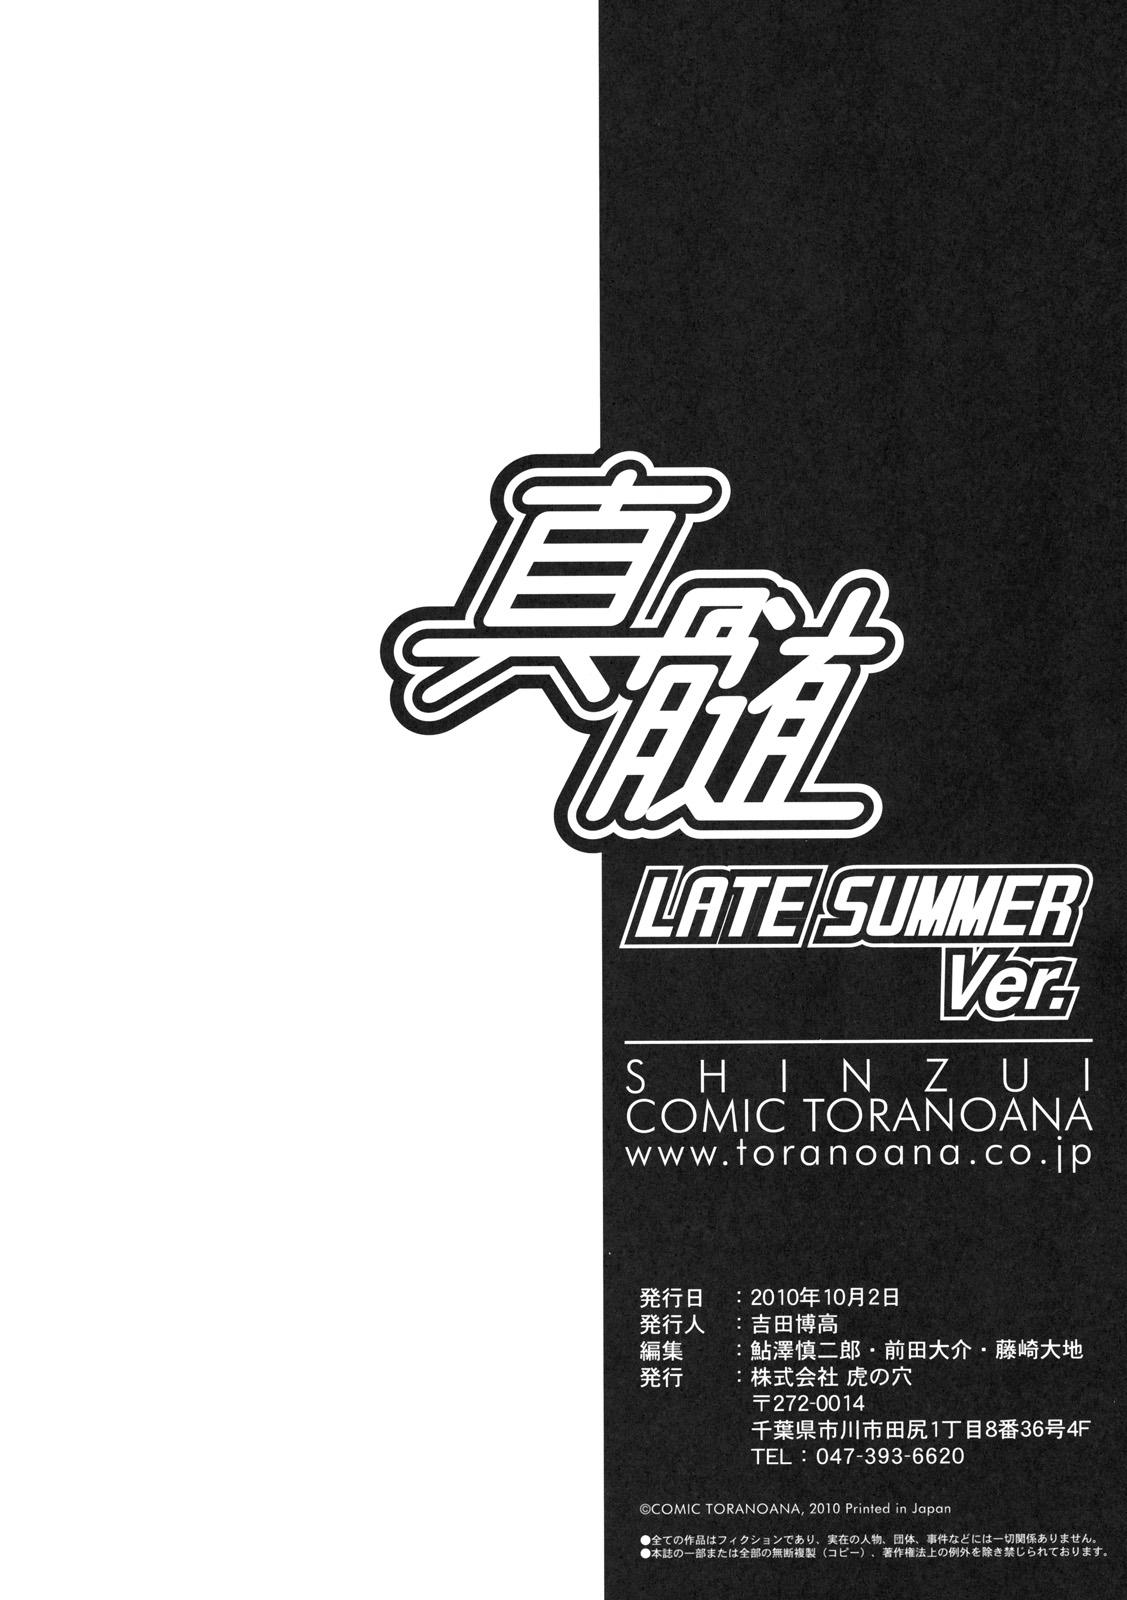 Shinzui LATE SUMMER Ver. 86